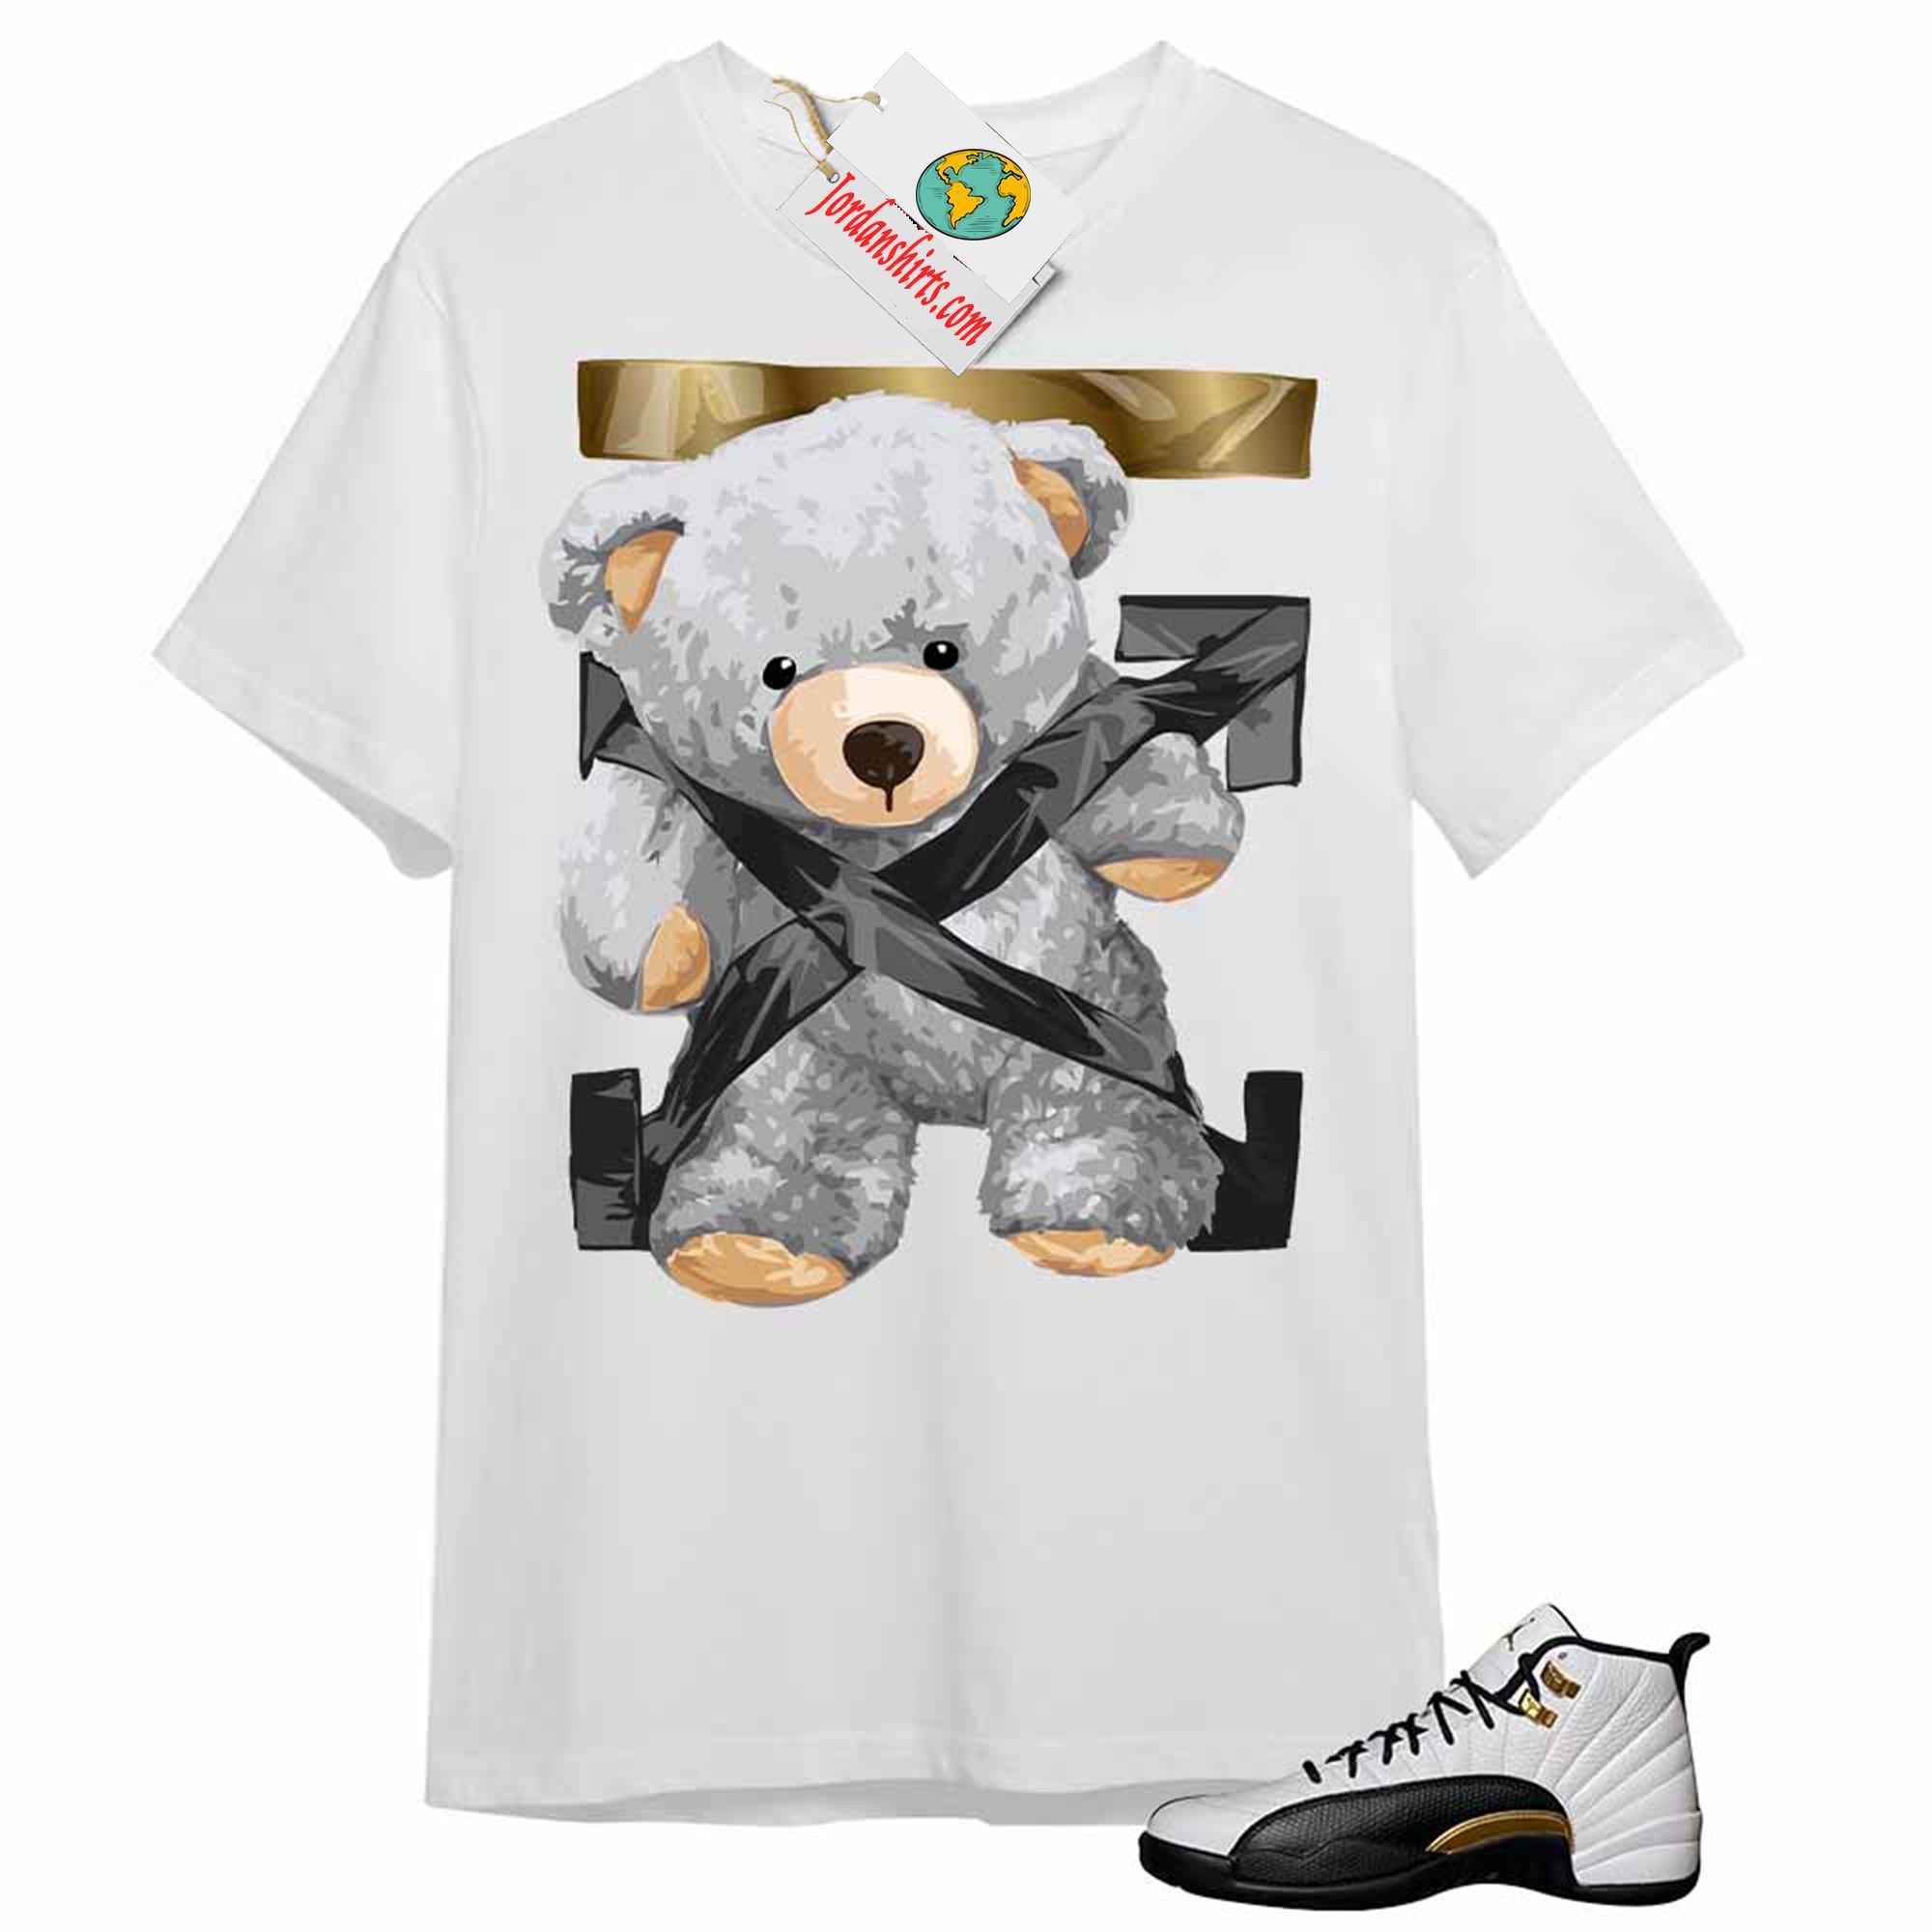 Jordan 12 Shirt, Teddy Bear Duck Tape White Air Jordan 12 Royalty 12s Size Up To 5xl